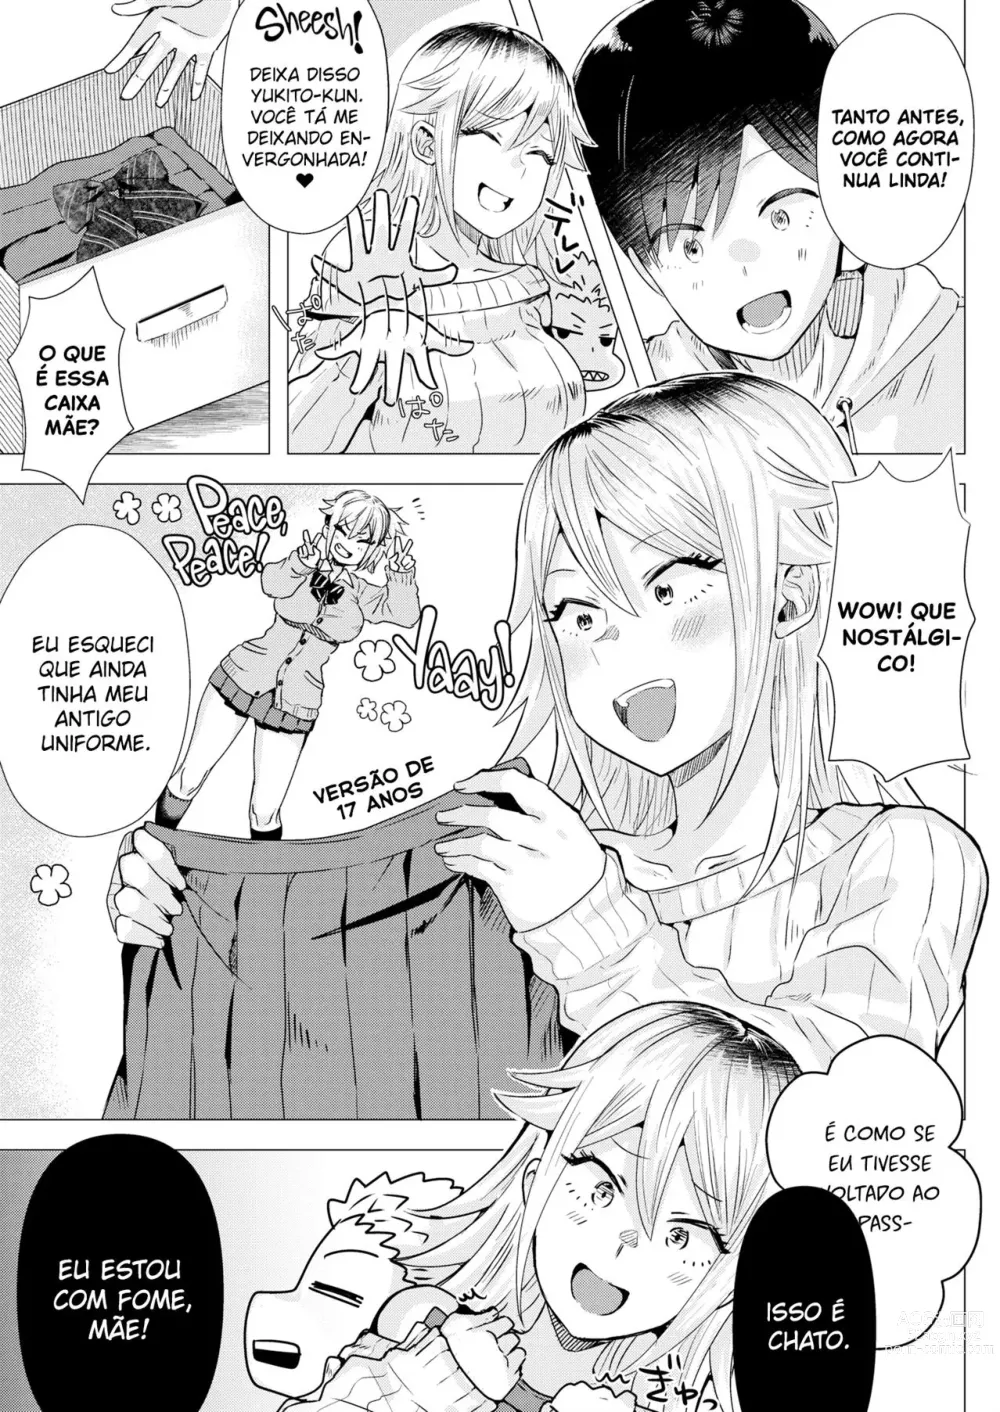 Page 3 of doujinshi Ataque repentino da mãe gyaru